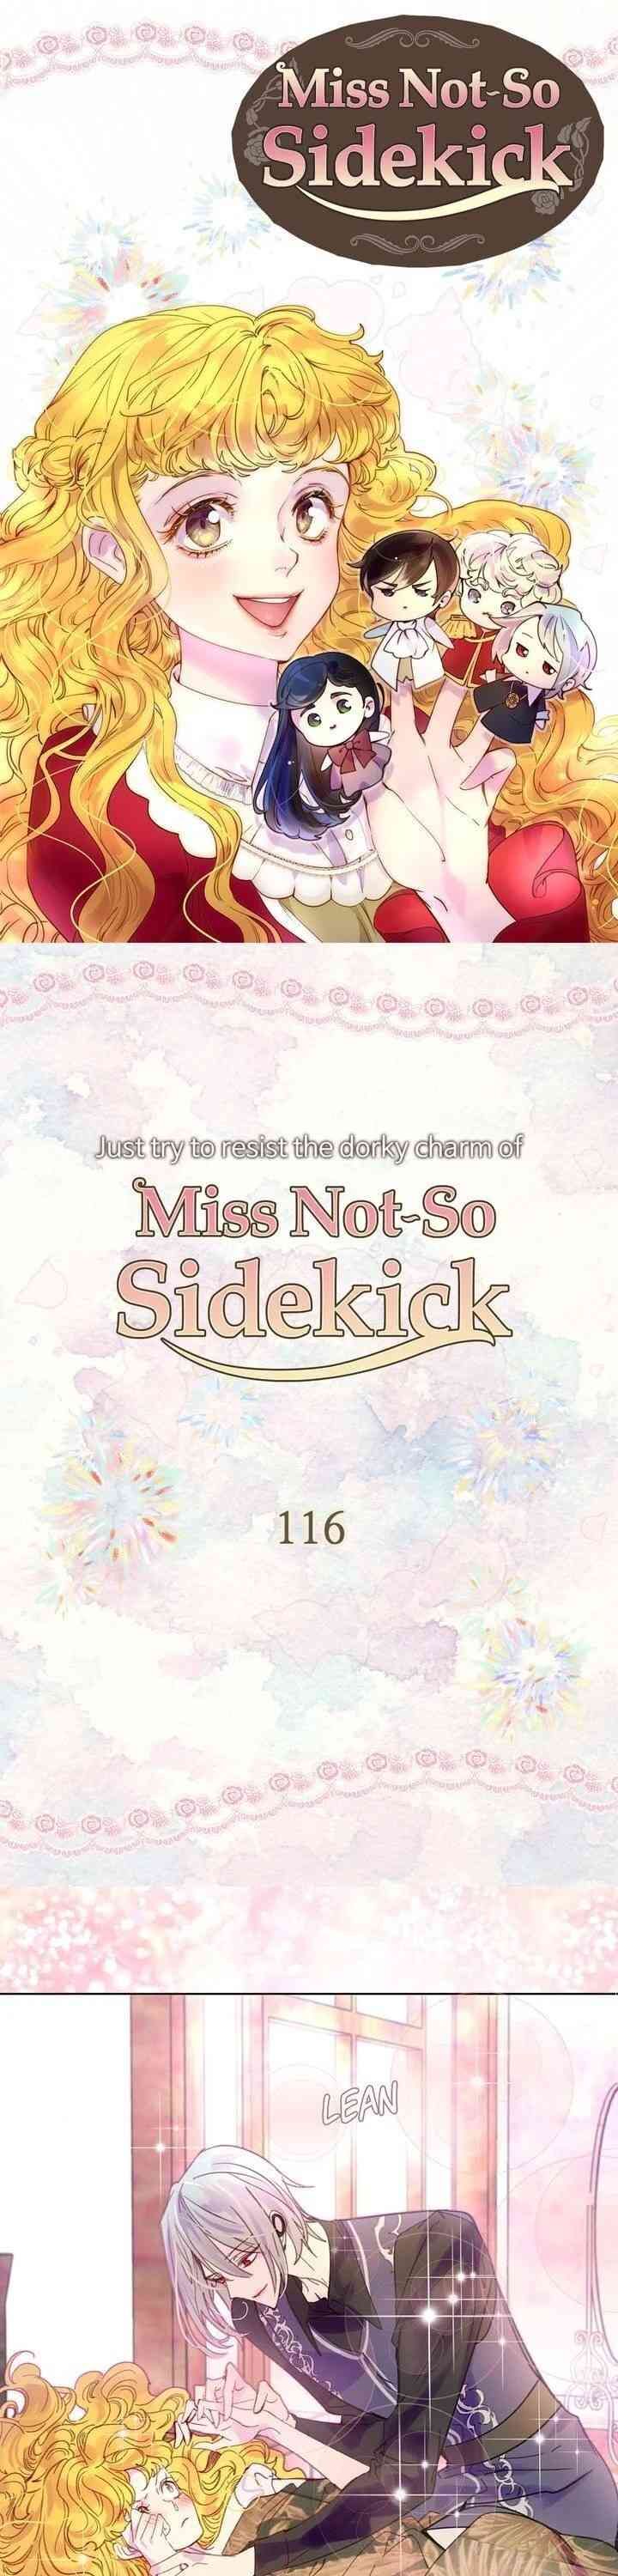 Miss Not-So Sidekick Chapter 116 page 1